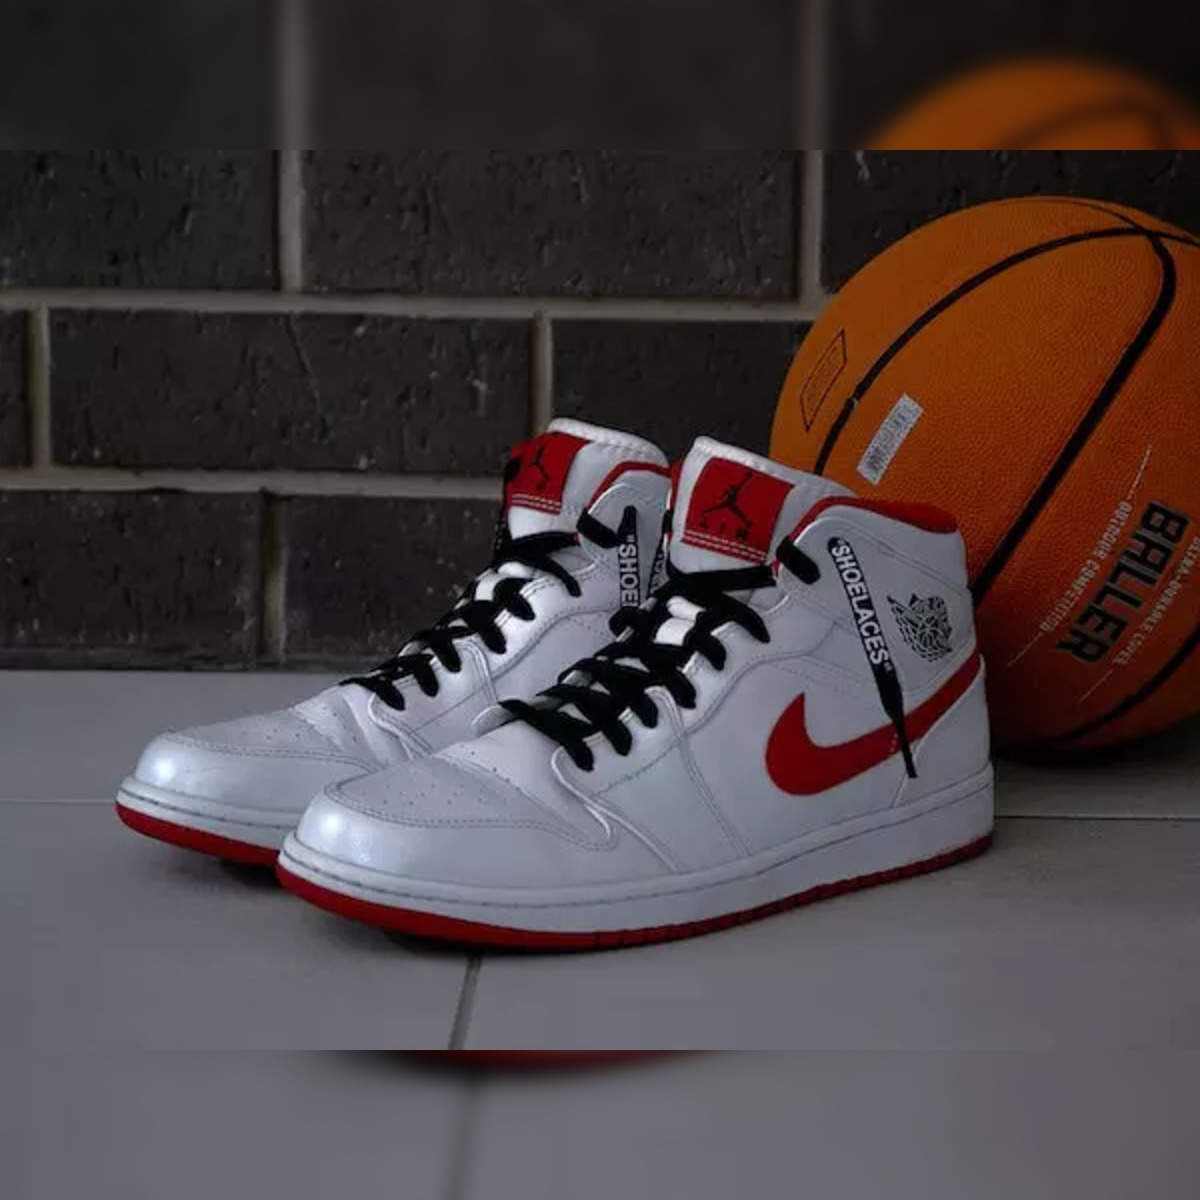 Nike Unveils LeBron James' Latest Signature Sneaker: The Nike LeBron 21